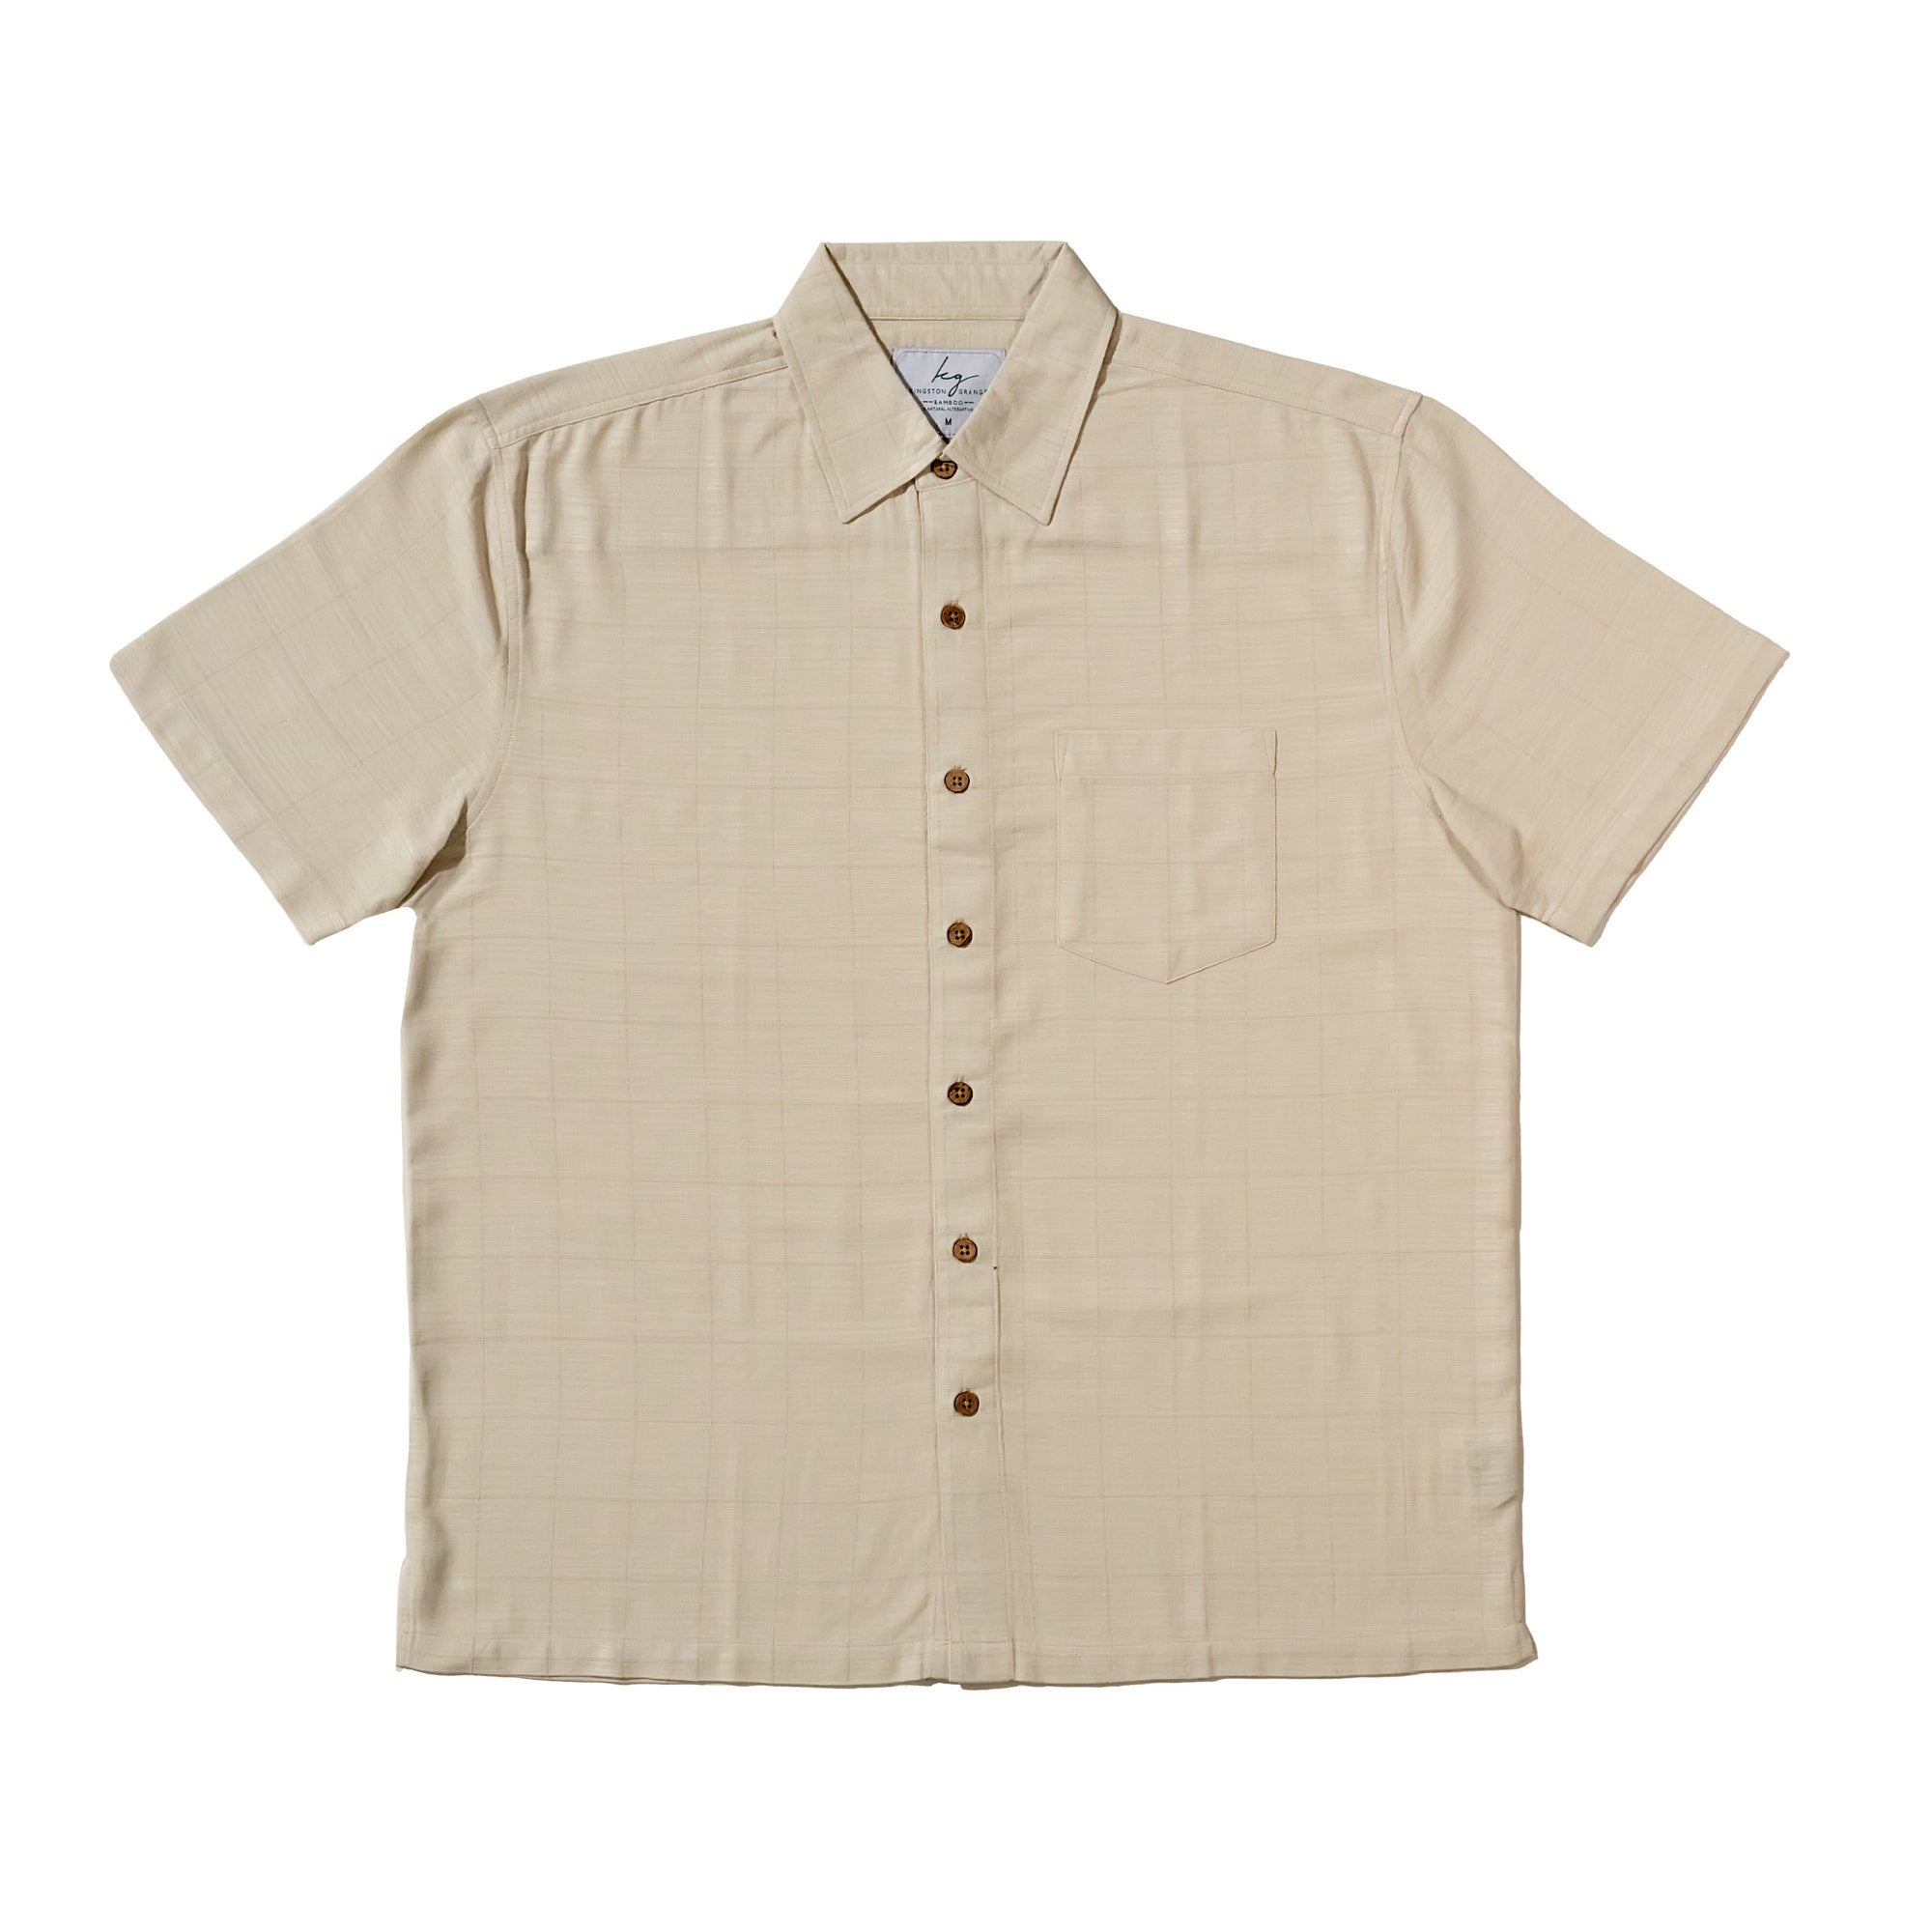 Bamboo Plain Shirt - bone